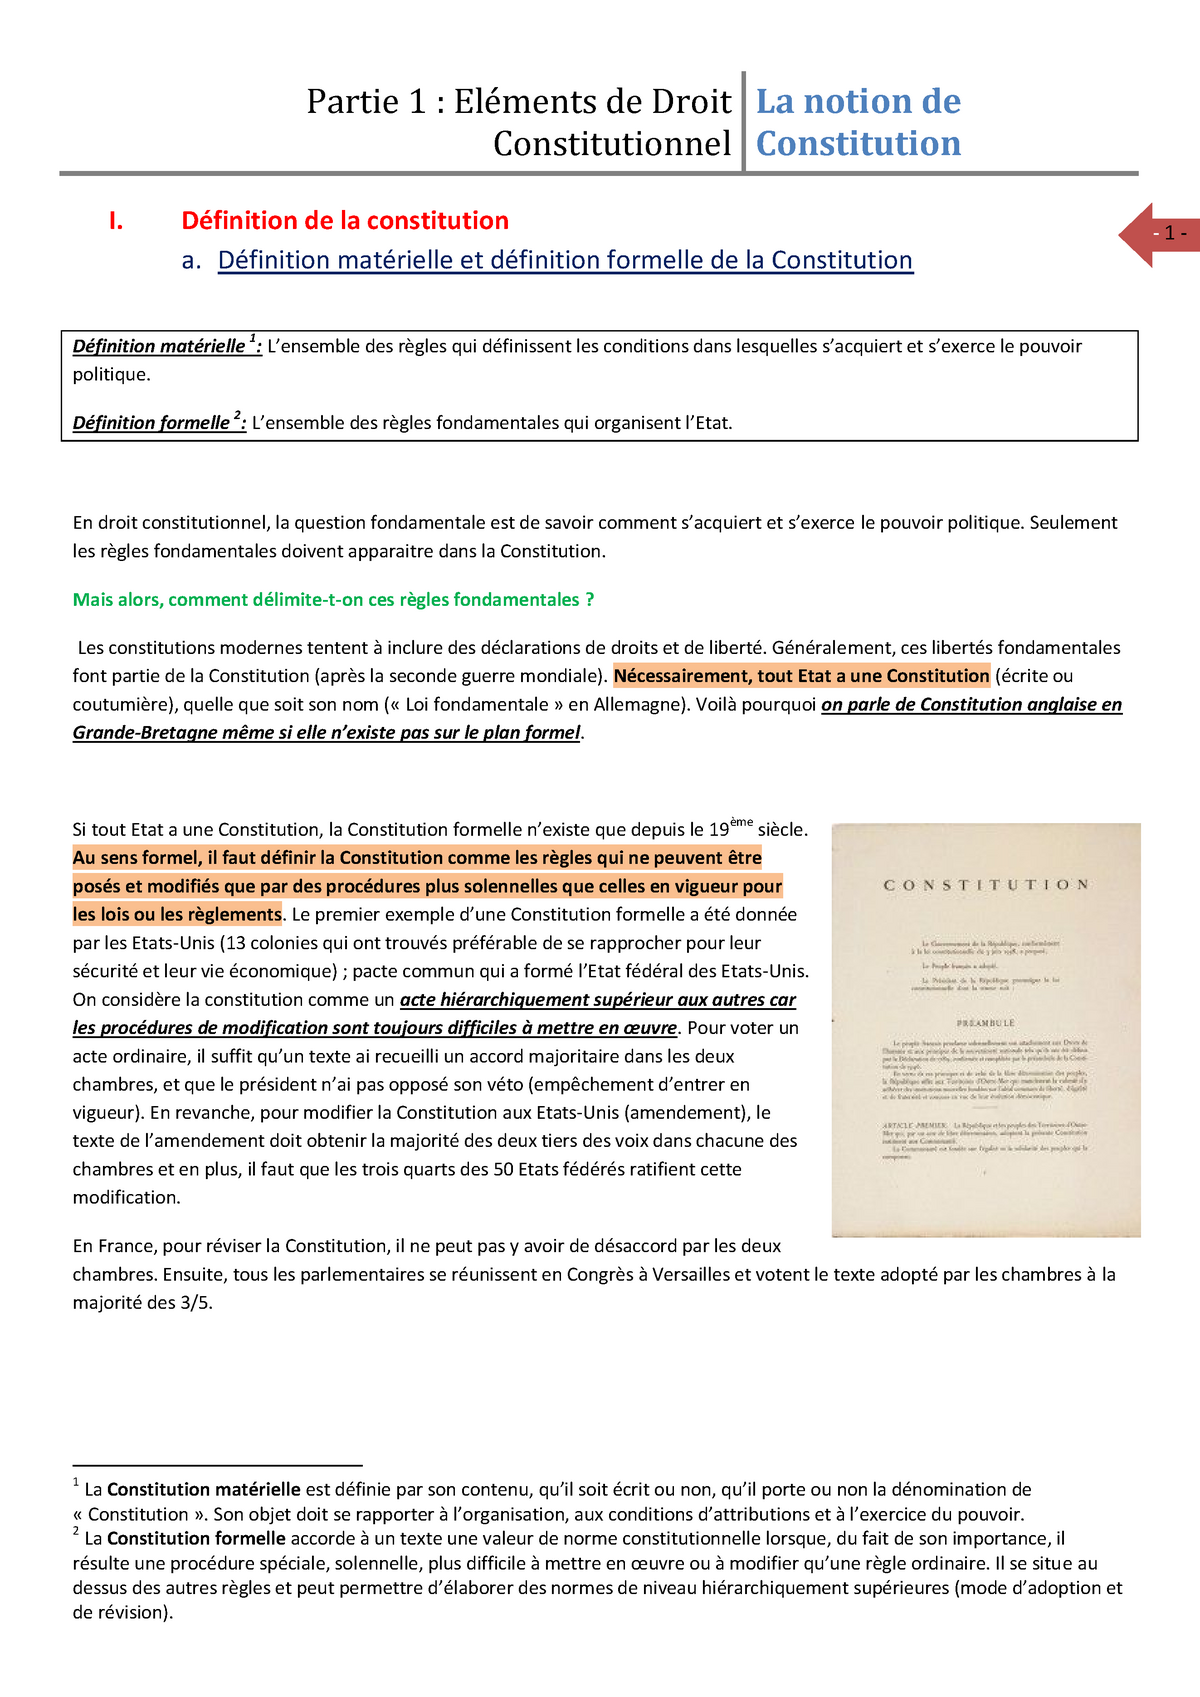 dissertation article 5 de la constitution